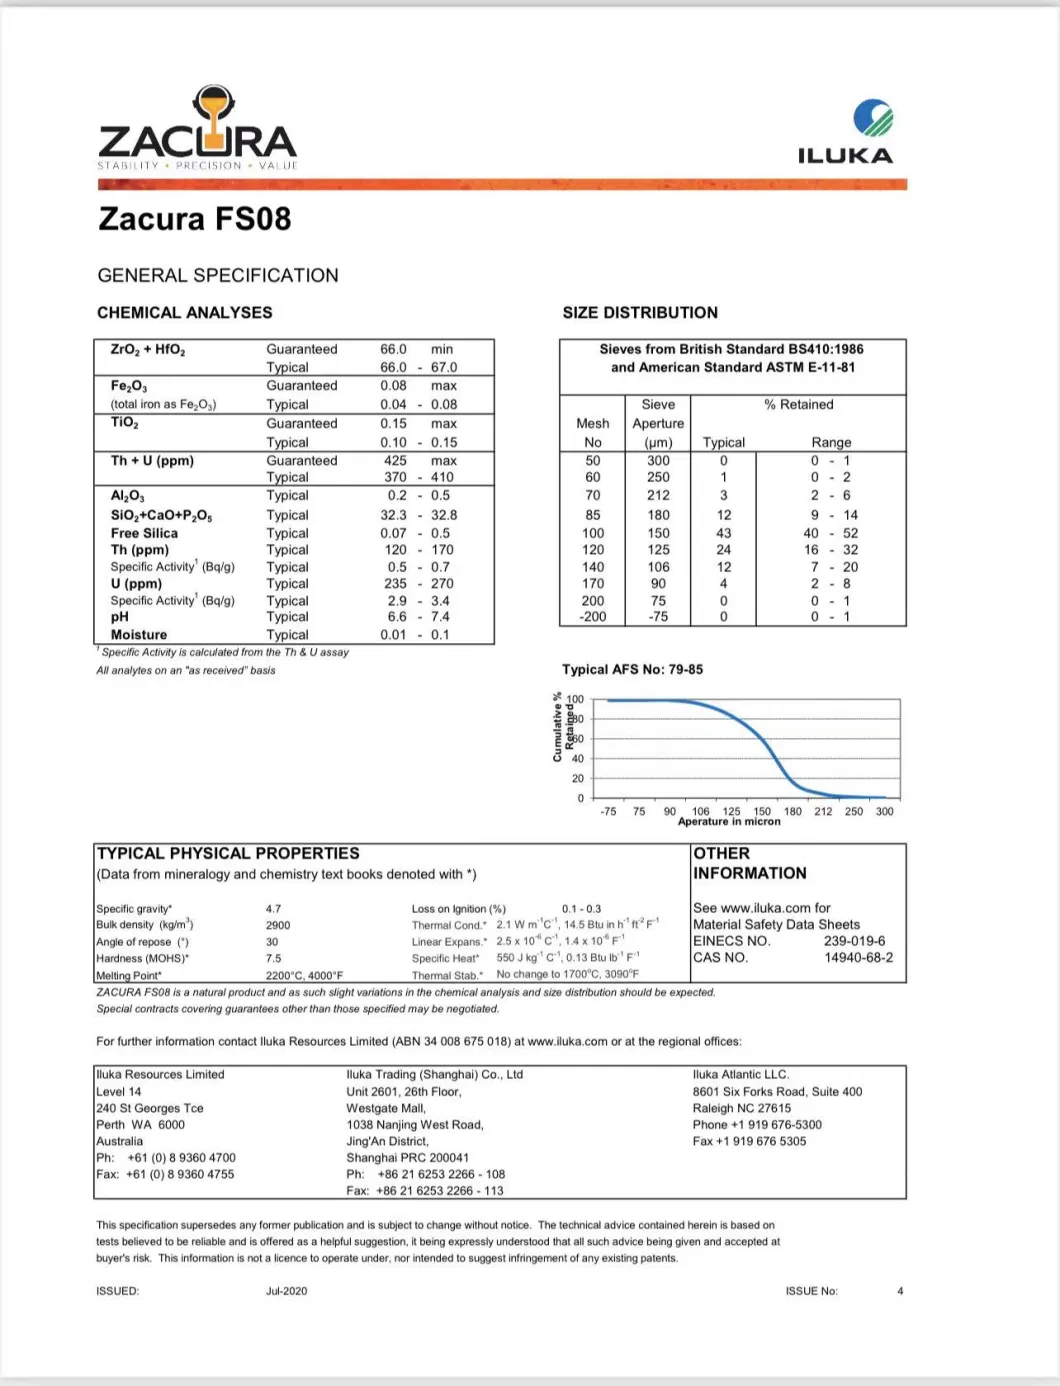 China Manufacturer 66.86% Purity Zro2 Zircon Sand for Investment Casting Zircon Flour 200mesh, 16-30mesh, 30-80mesh, 80-120mesh, 325mesh